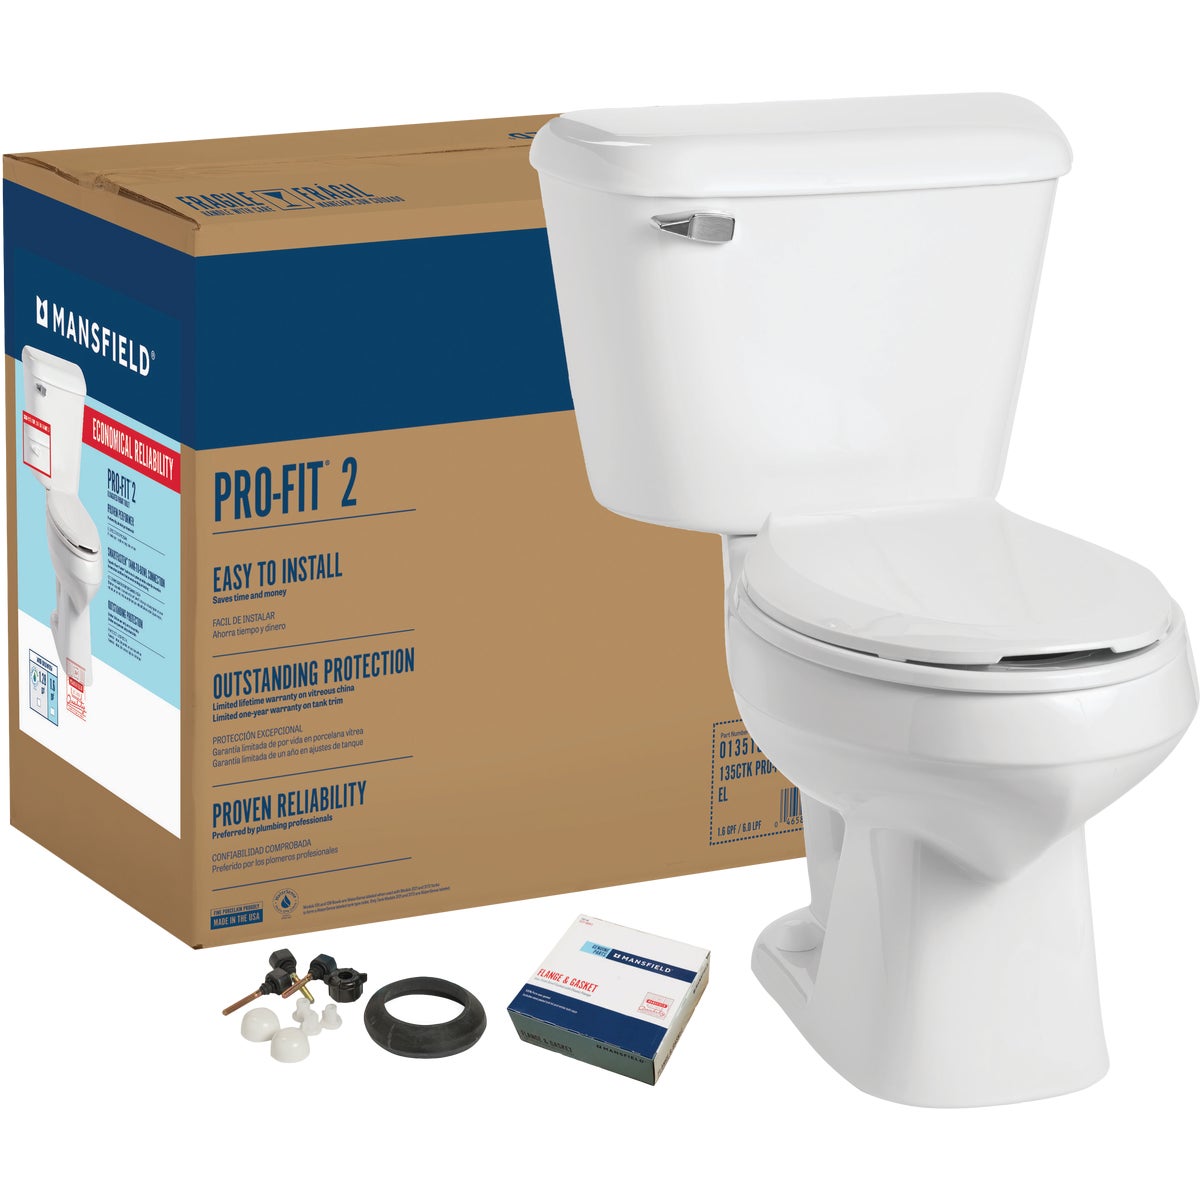 Mansfield Pro-Fit 2 White Elongated Bowl 1.6 GPF Toilet Kit